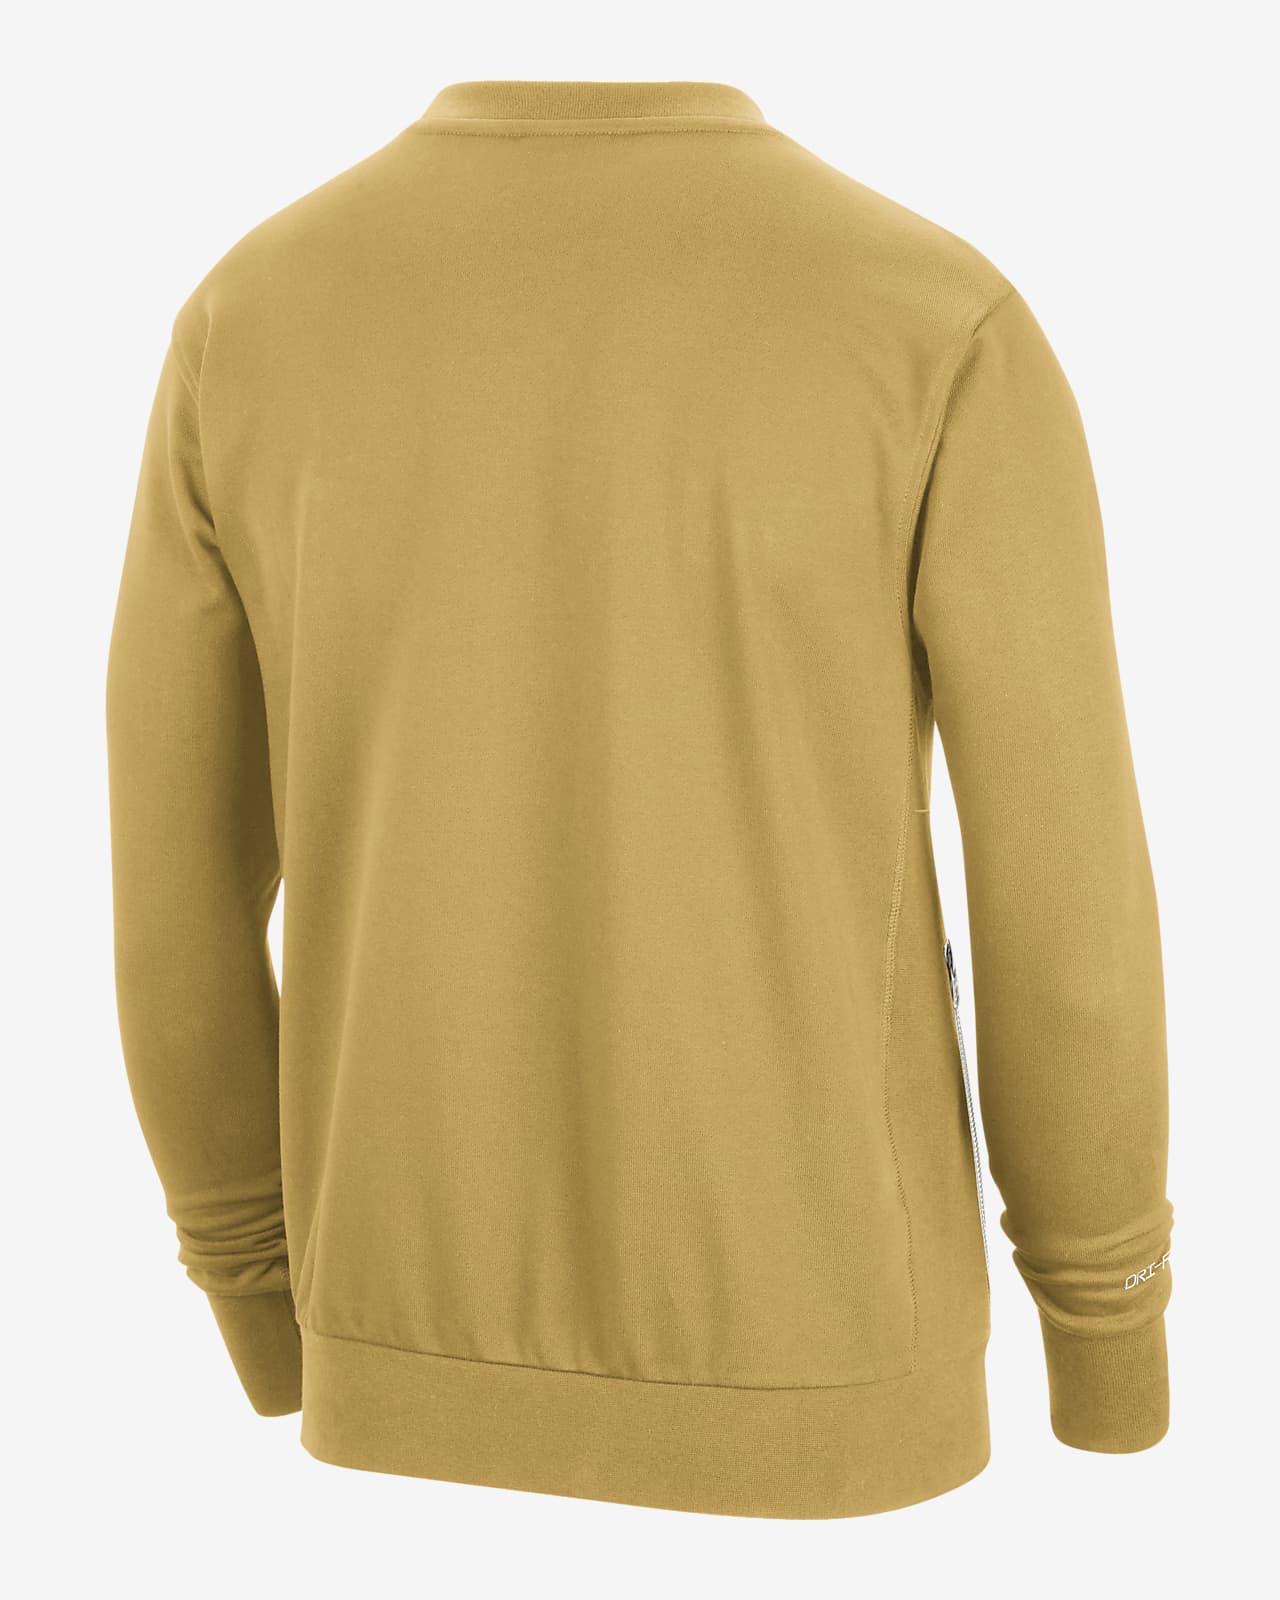 Golden State Warriors Standard Issue Dri-FIT Sweatshirt. Men\'s Nike NBA